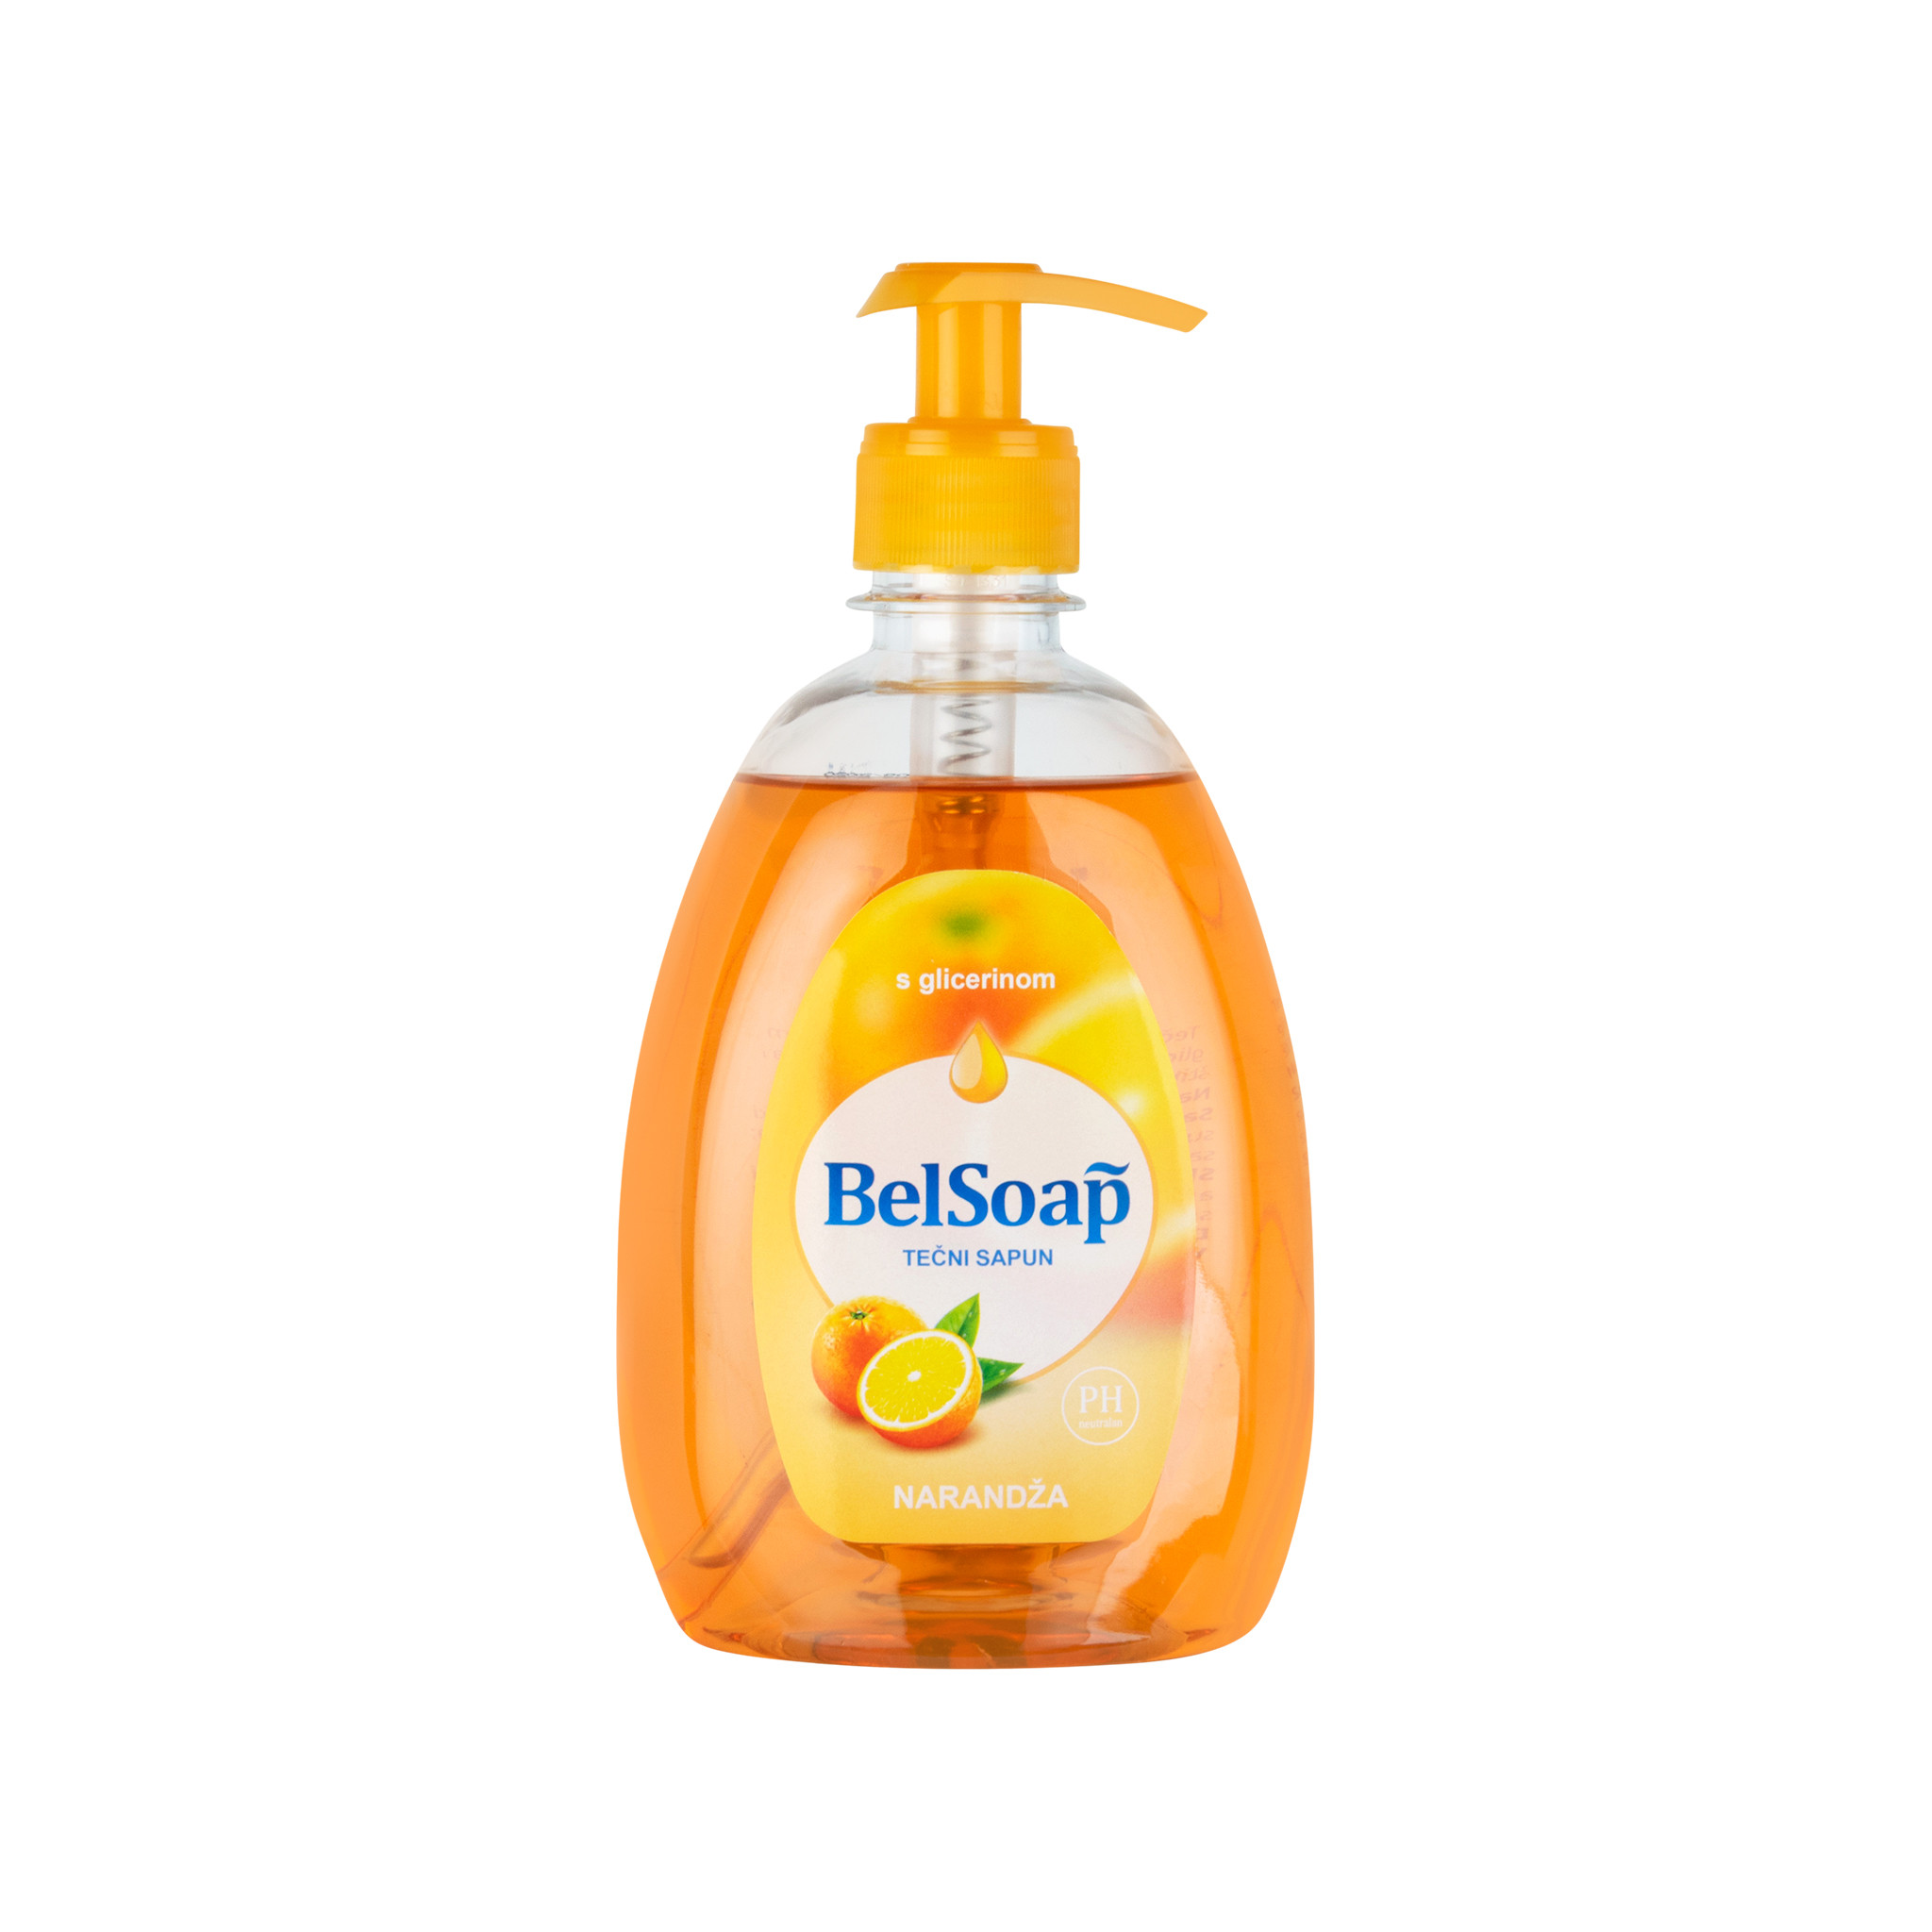 BelSoap tečni sapun narandža SP 0,5L